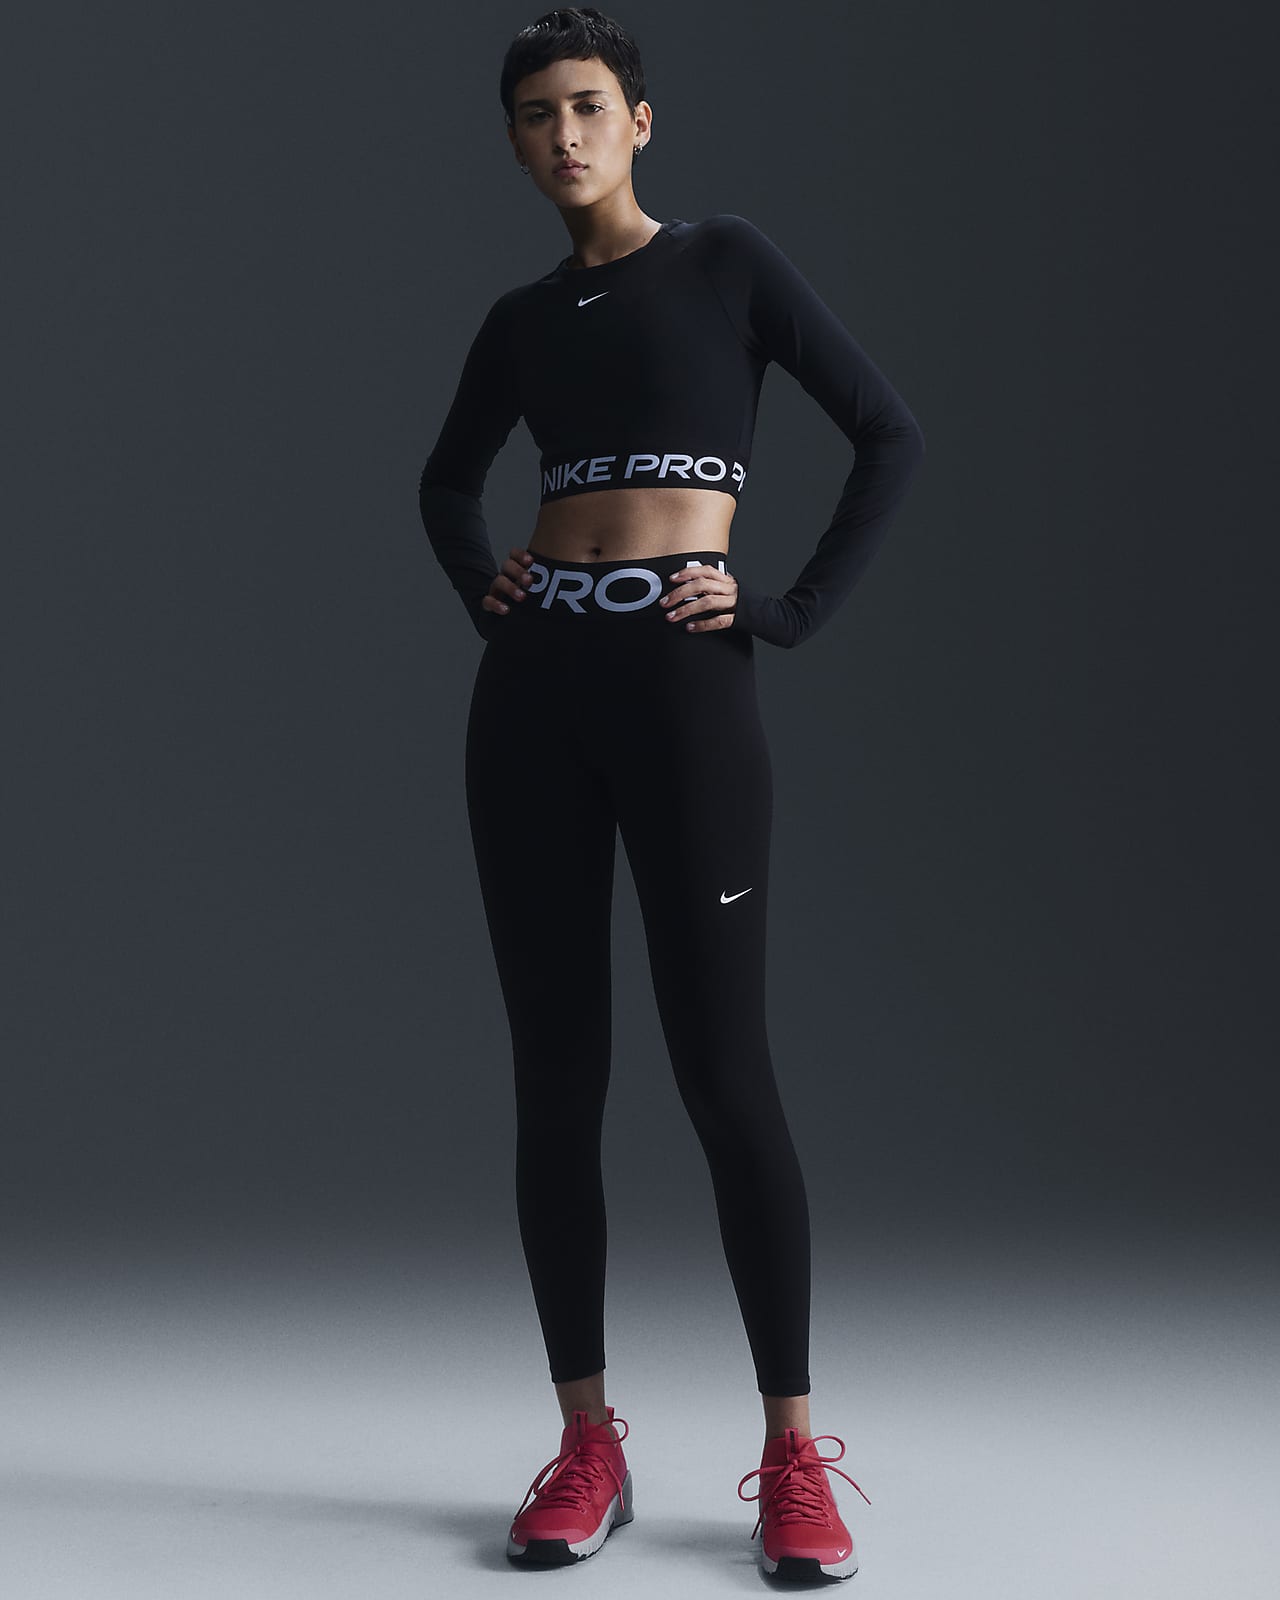 Nike Pro Sculpt Leggings in voller Länge mit hohem Bund (Damen)